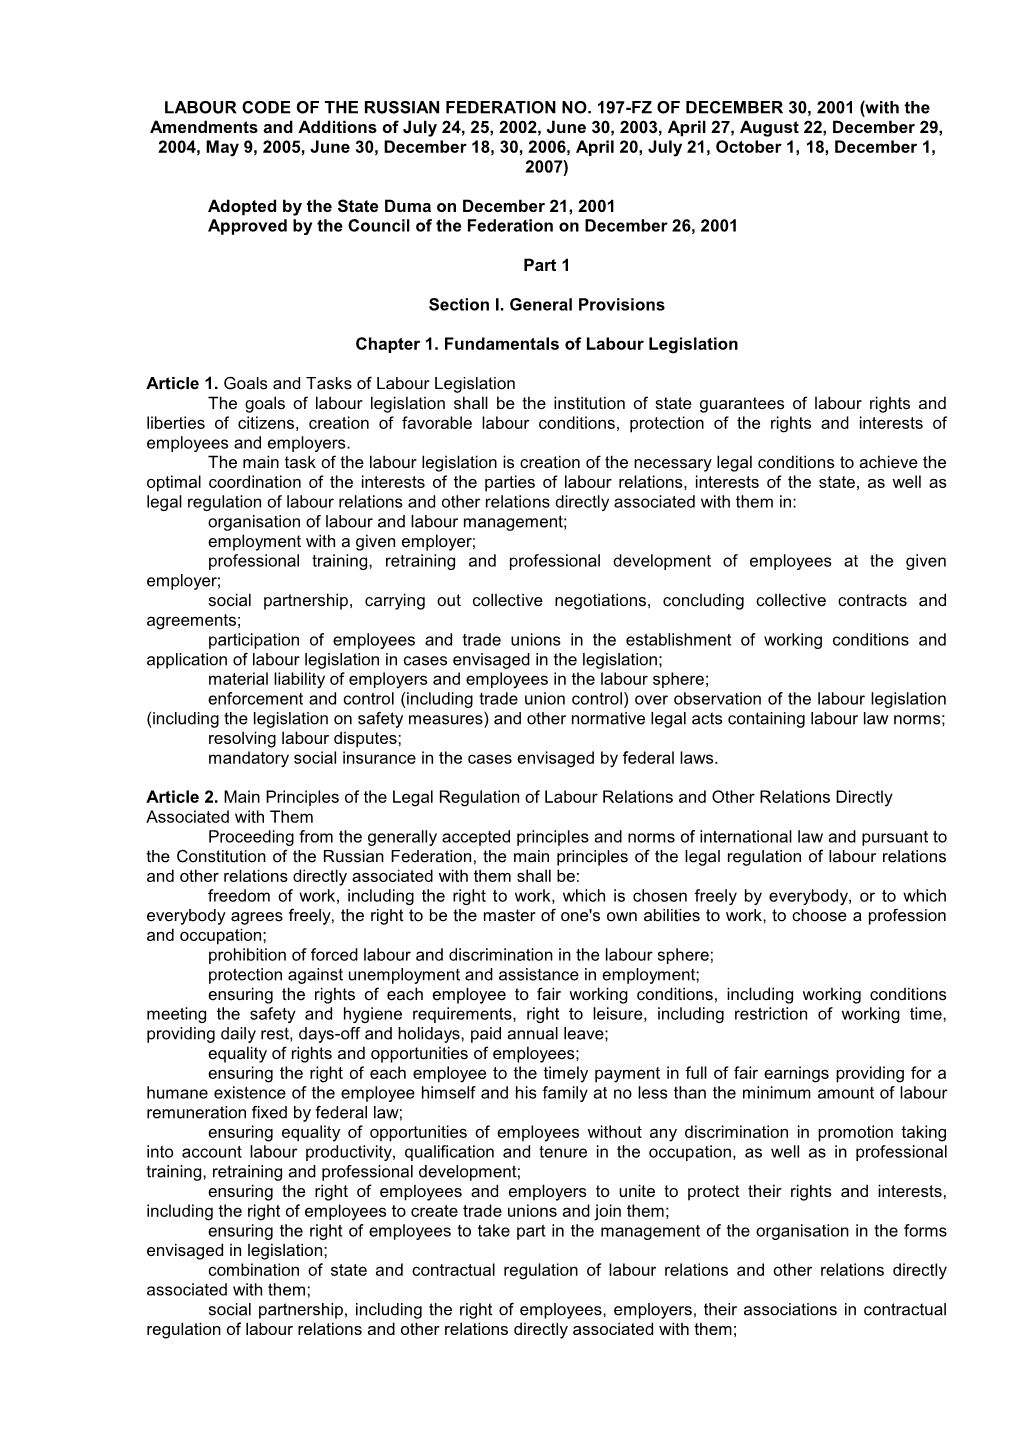 Labour Code of Rf No. 197-Fz of 30.12.01